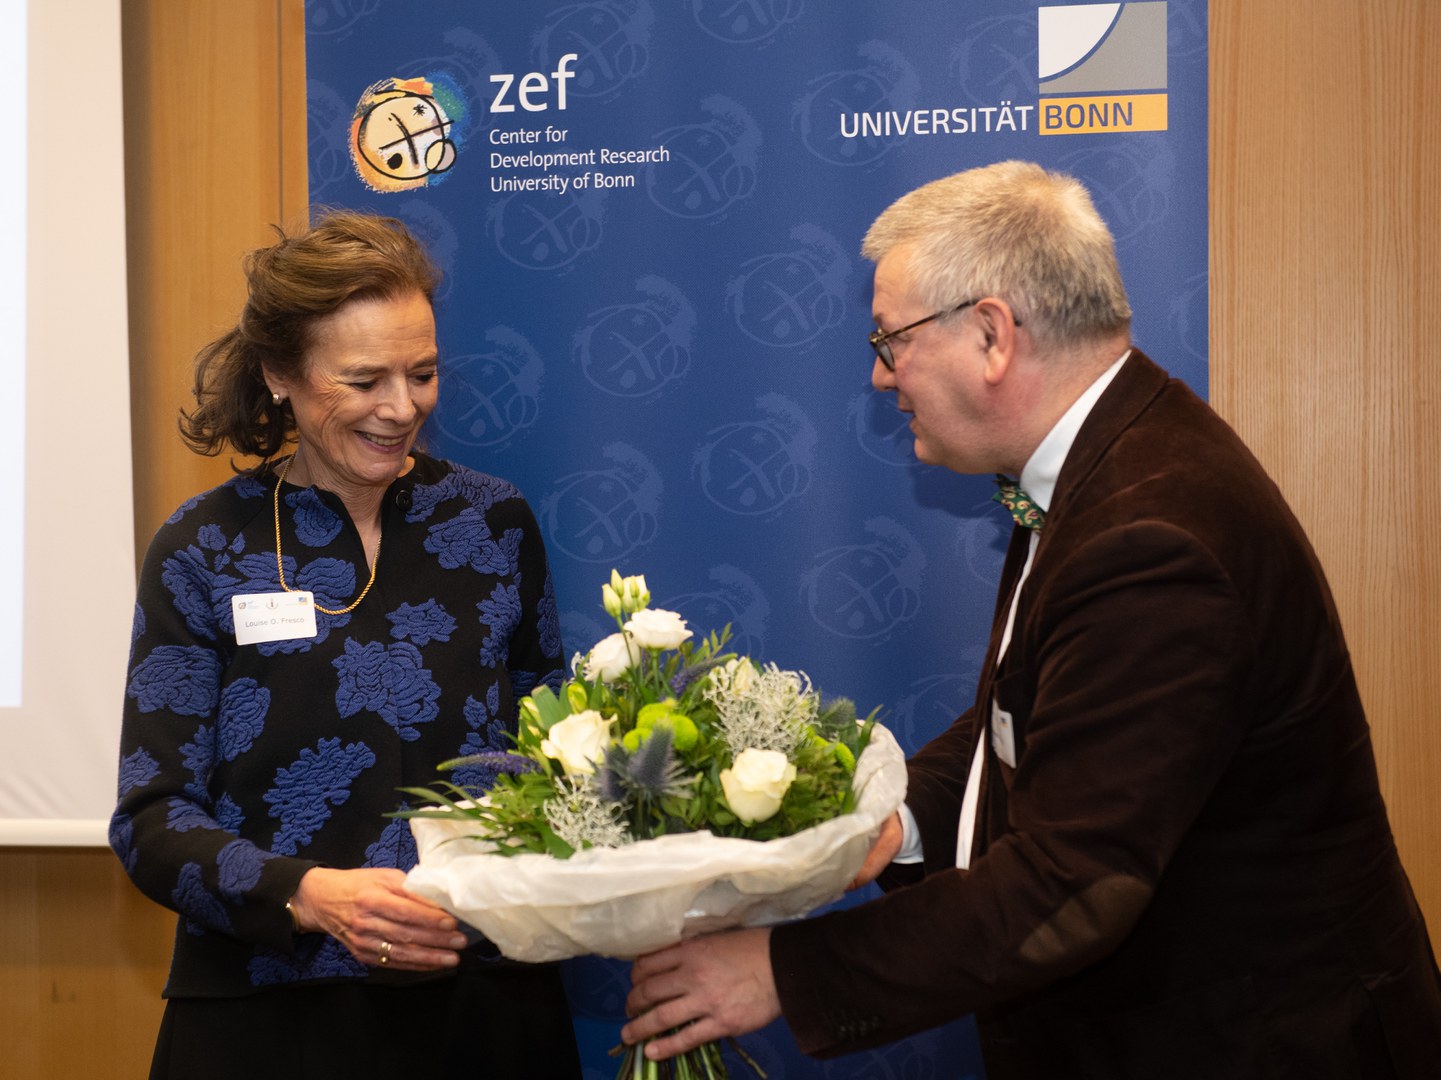 Award ceremony at ZEF, University of Bonn